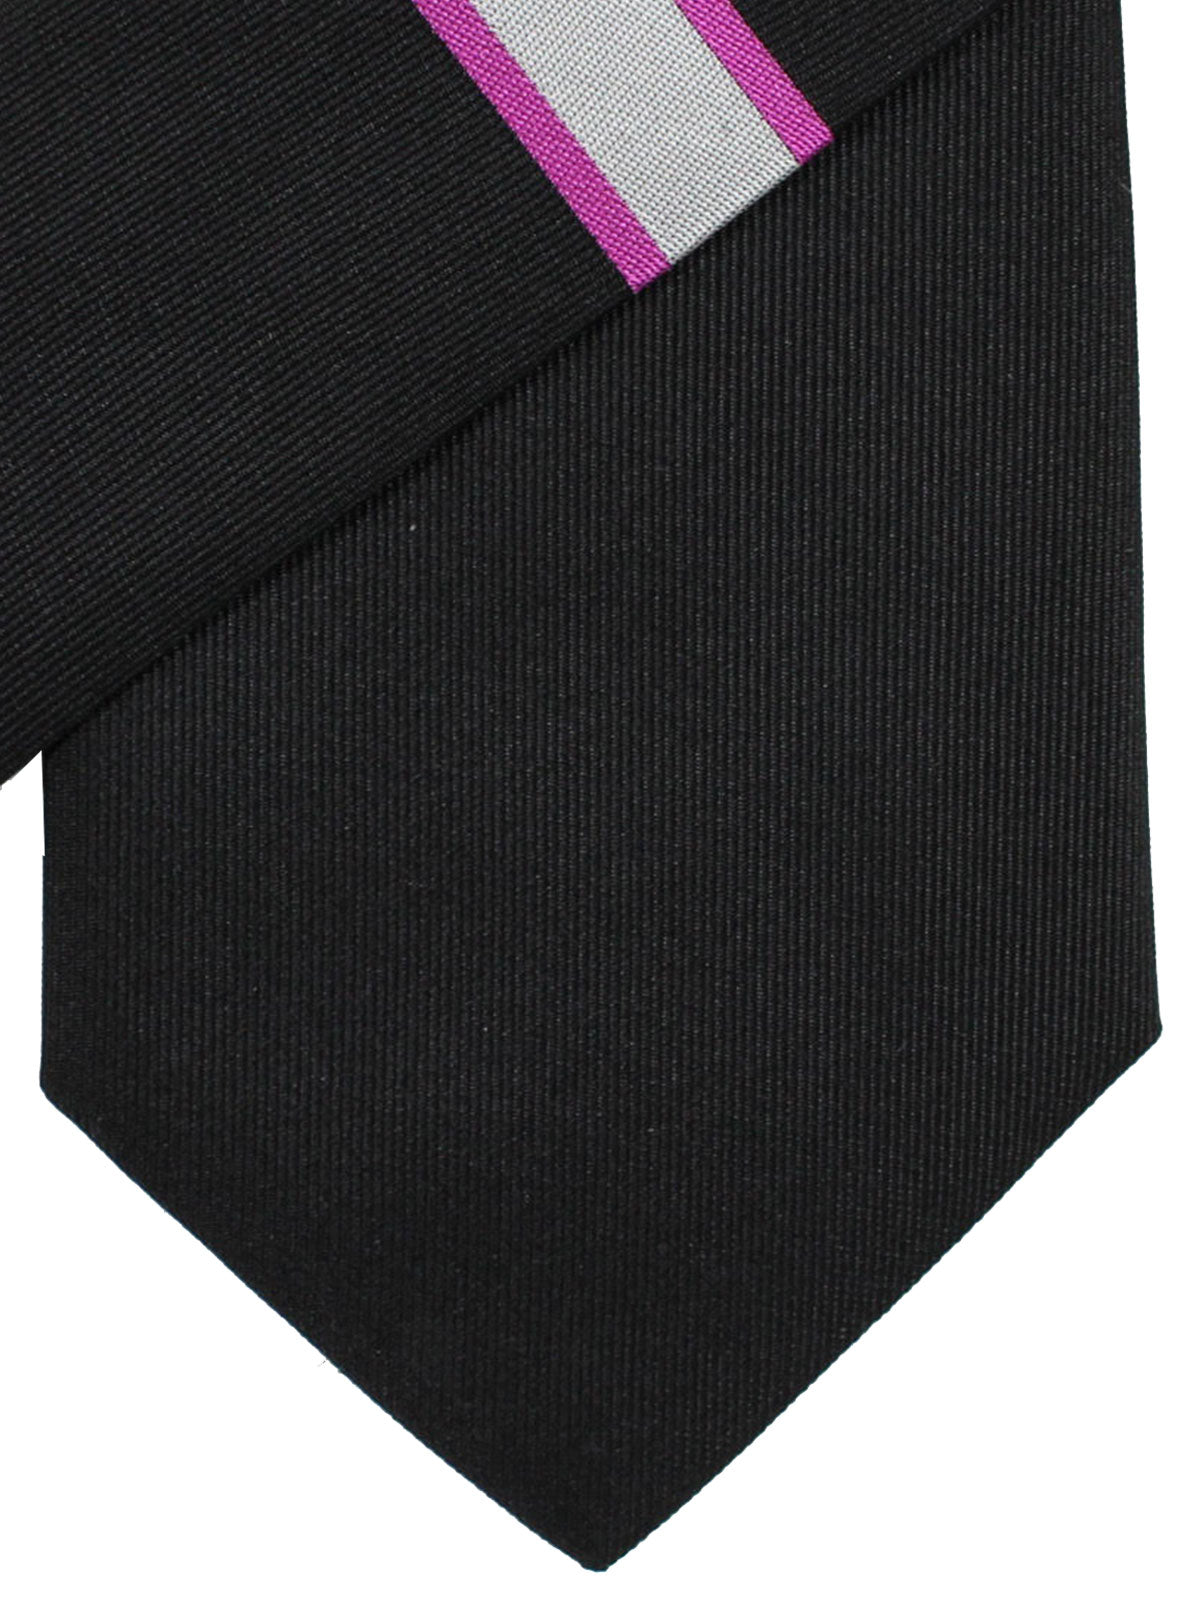 Gene Meyer Tie Black Pink Gray Design